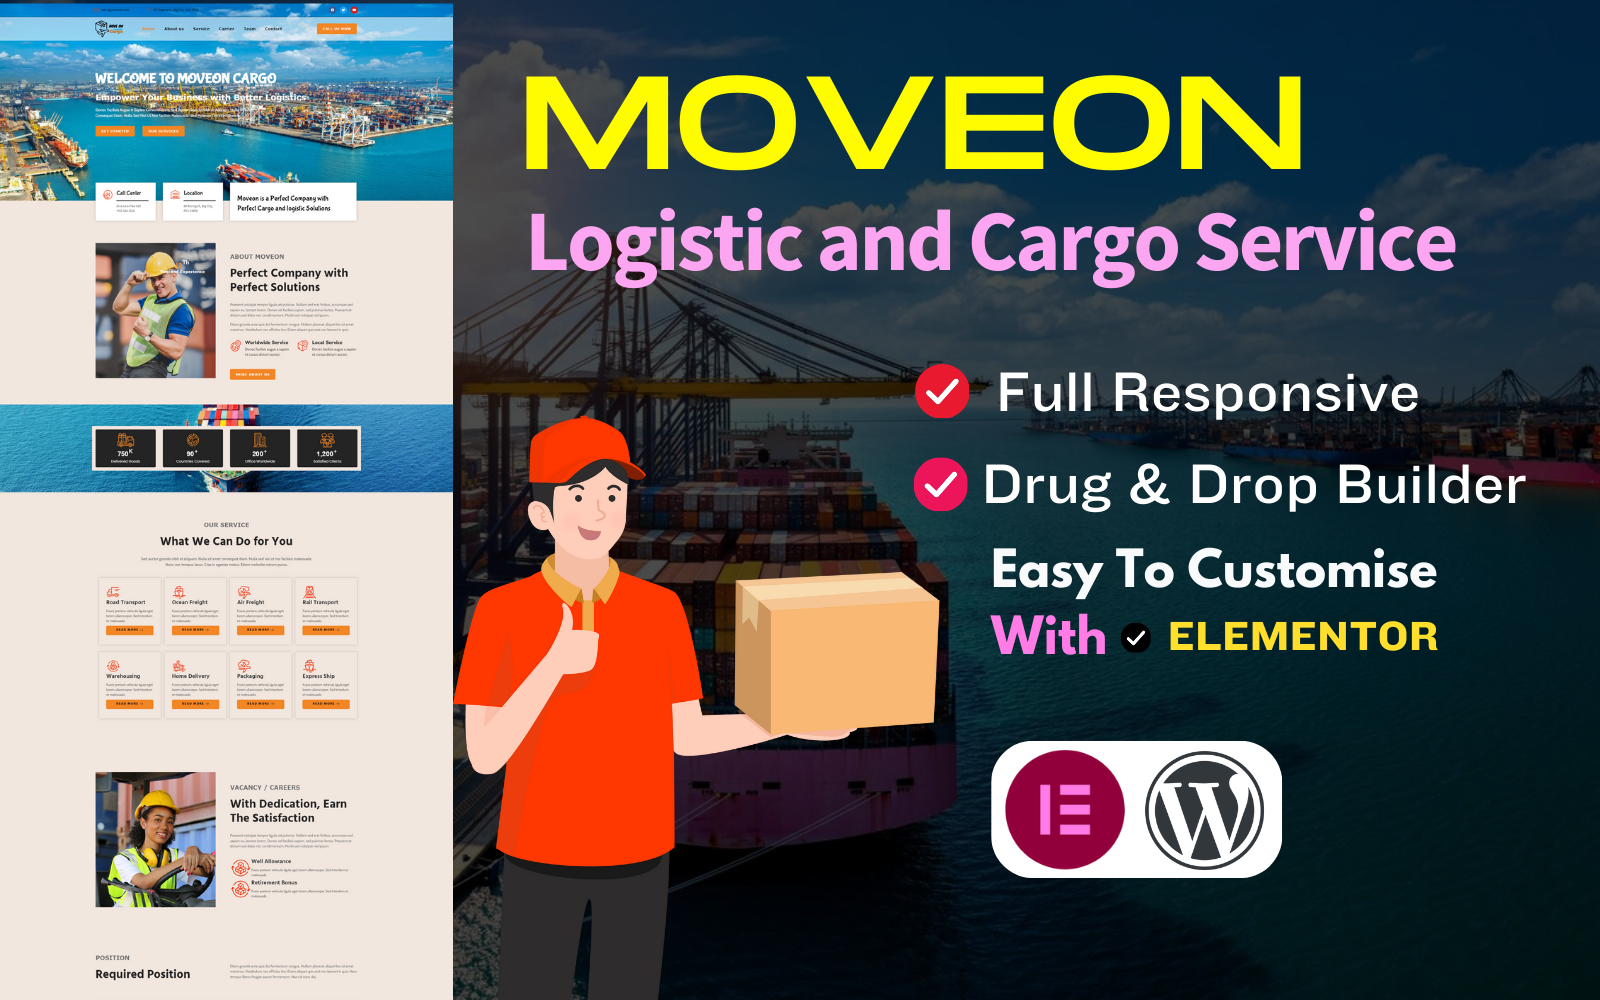 Moveon Logistic and Cargo Service Wordpress Theme